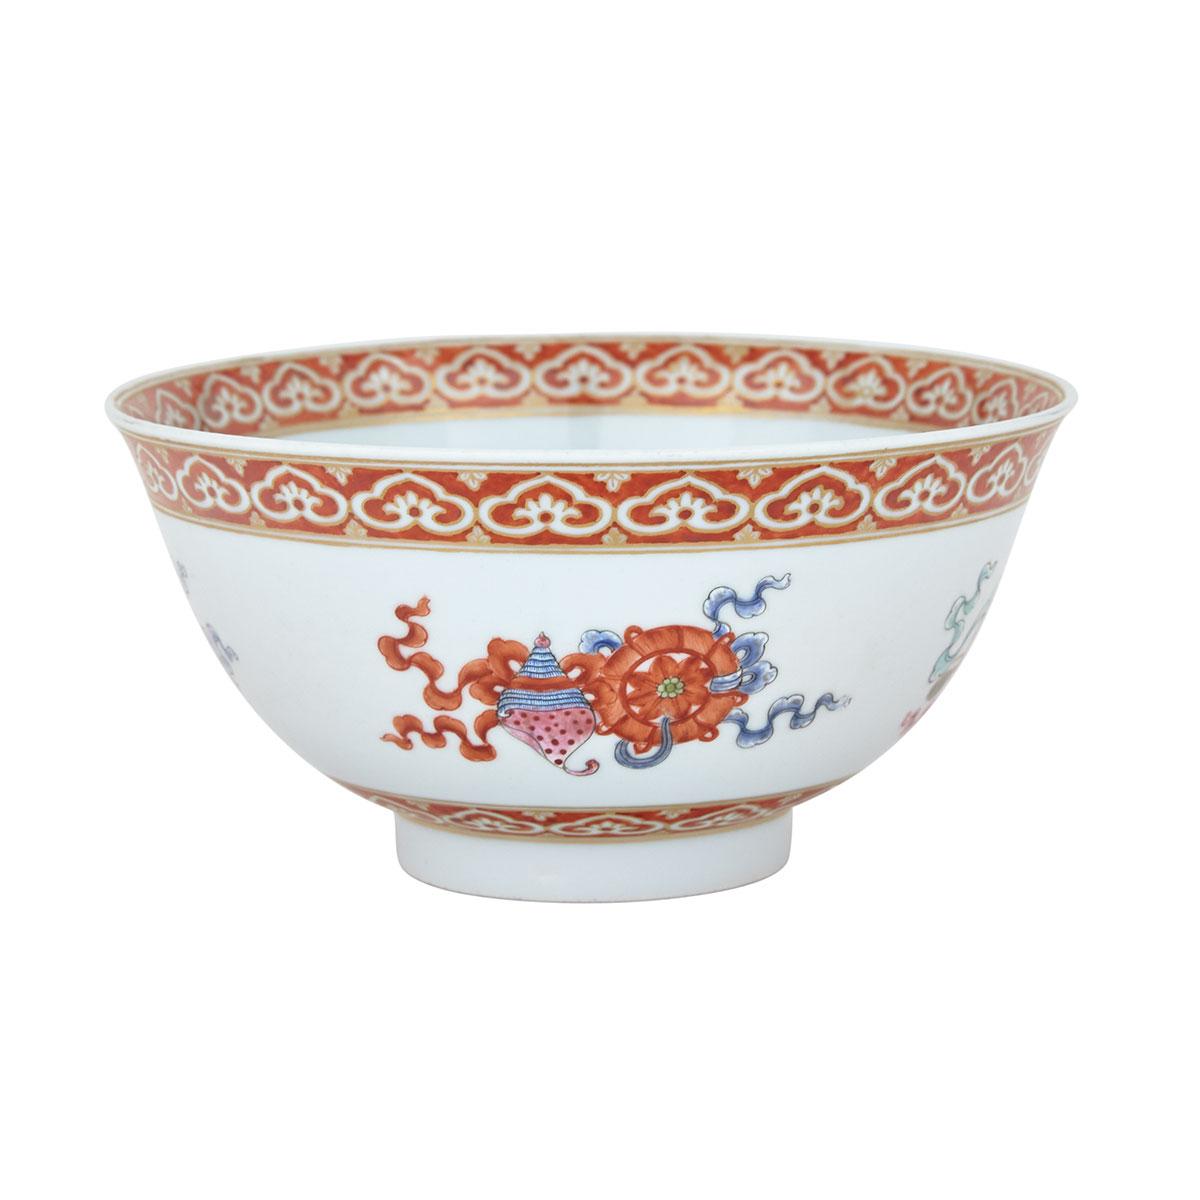 Famille Rose ‘Buddhist Emblem’ Bowl, Guangxu Mark and Period (1875-1908)